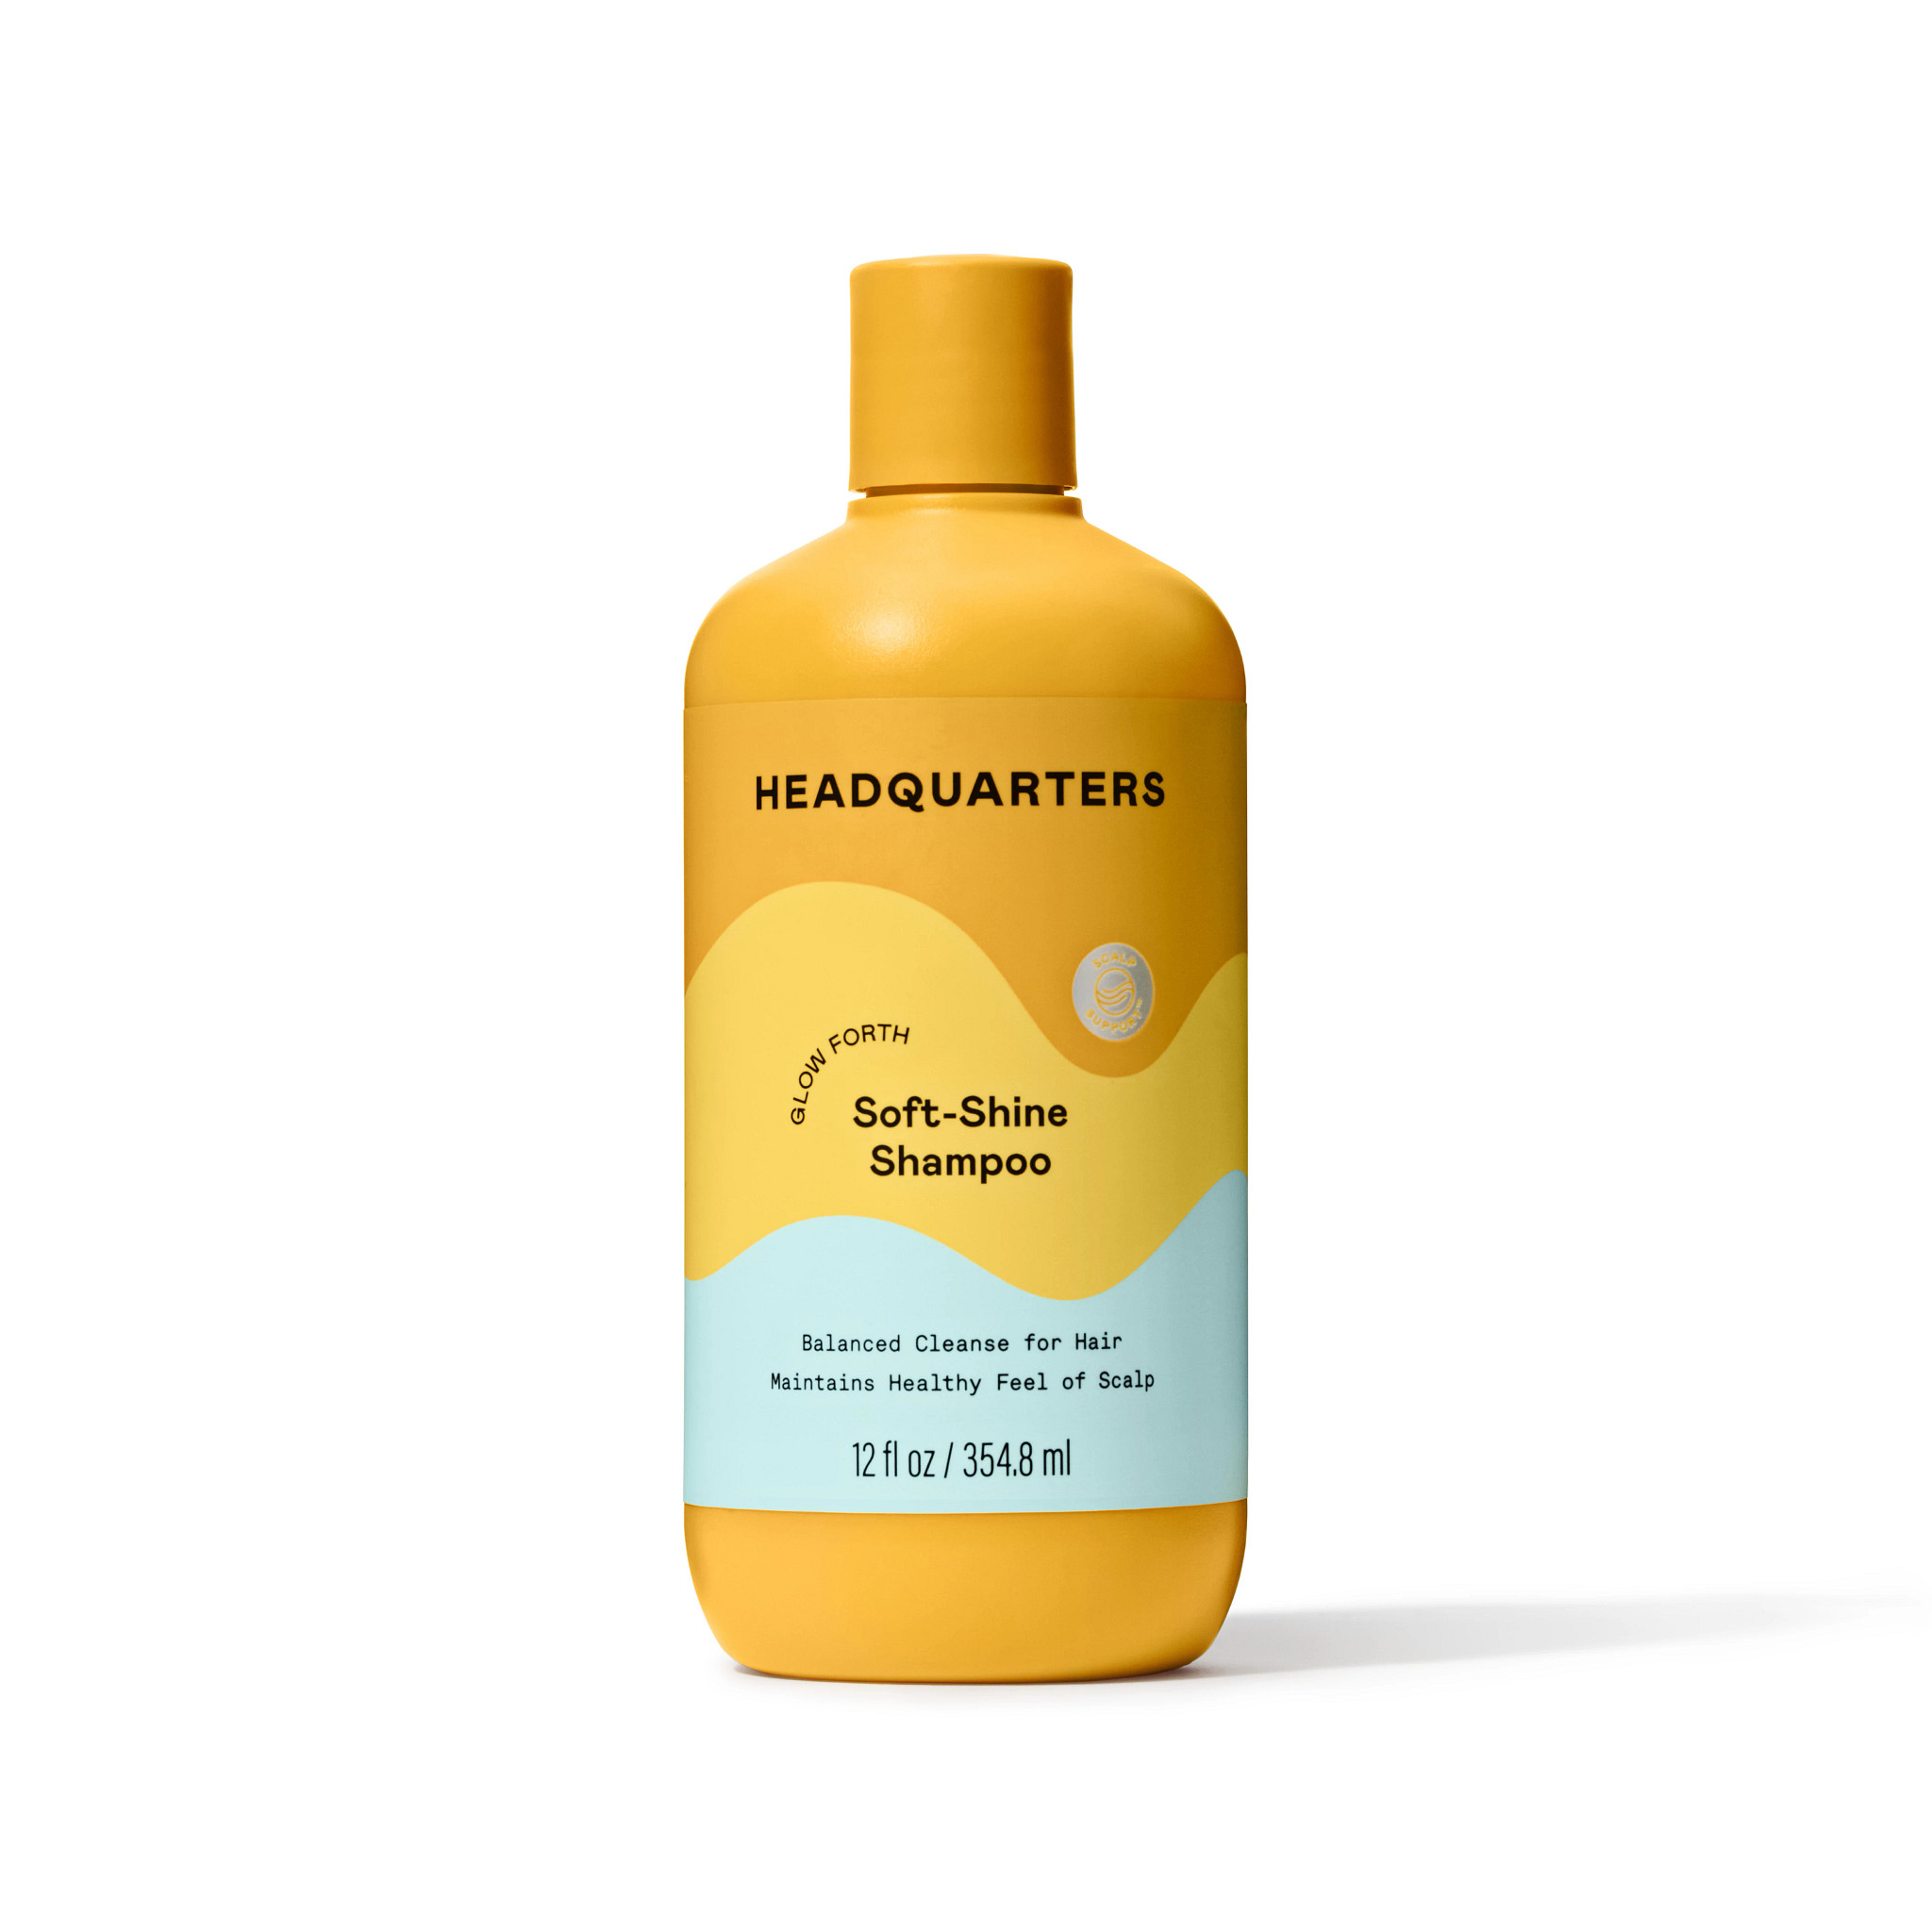 Headquarters Soft-Shine Shampoo for Balanced or Combination Scalp and Hair, 12 fl oz - image 1 of 12